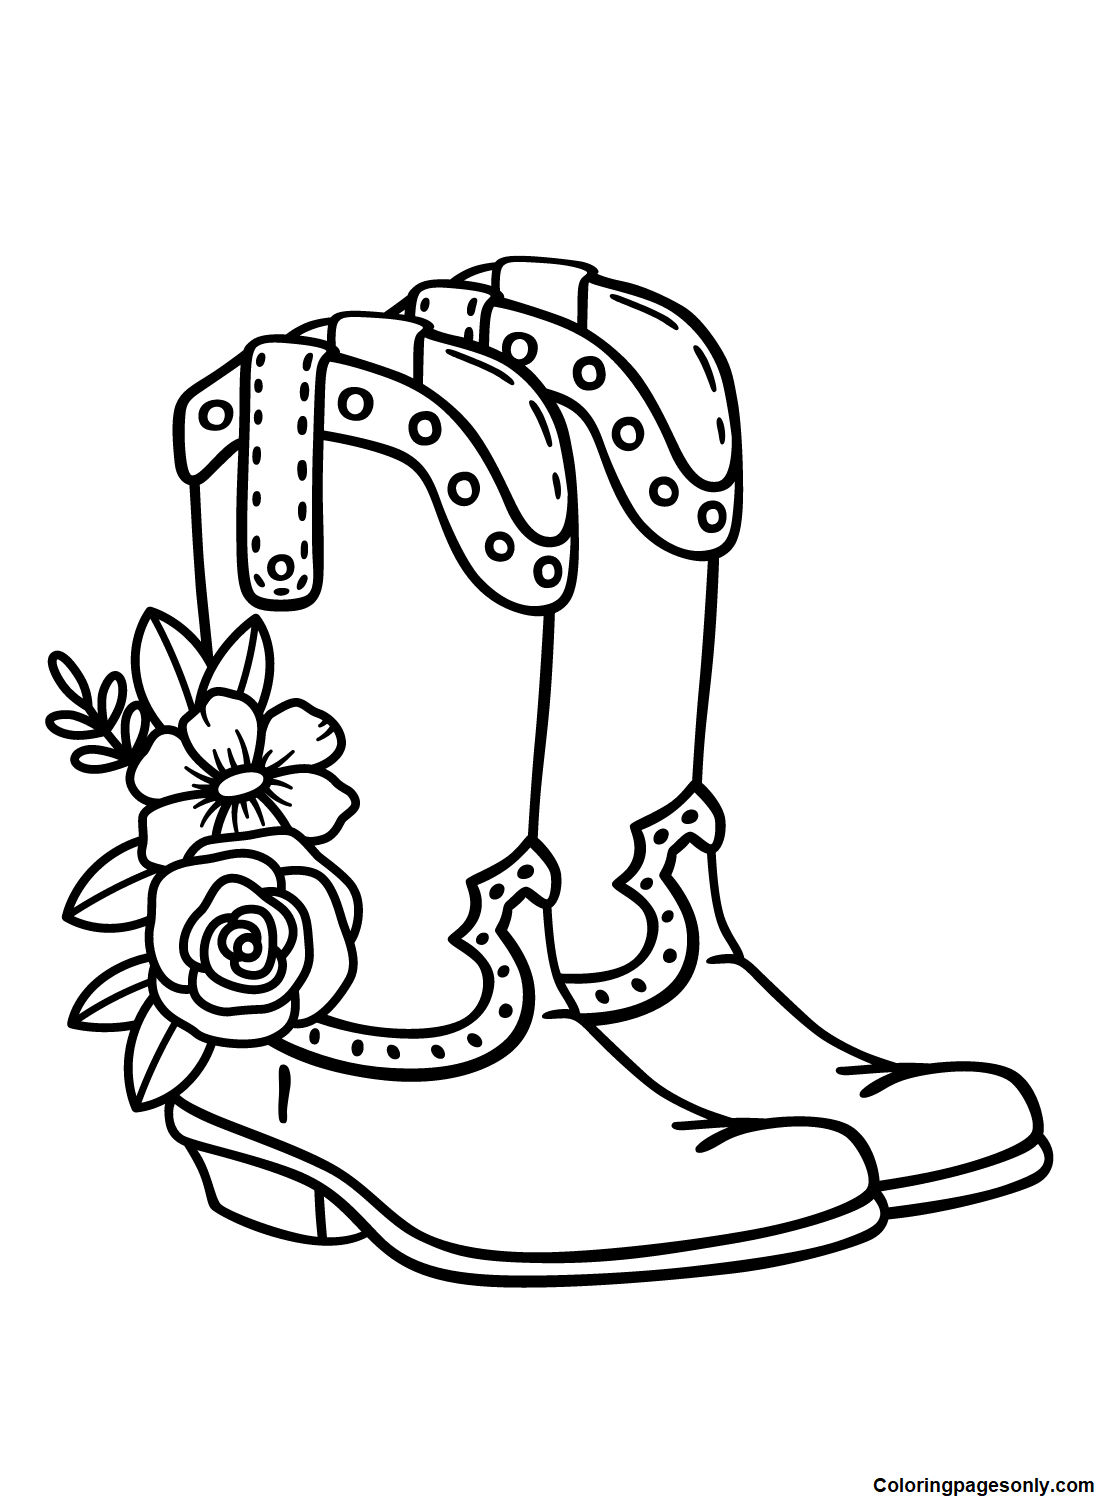 Cowboy Boots Floral Coloring Page